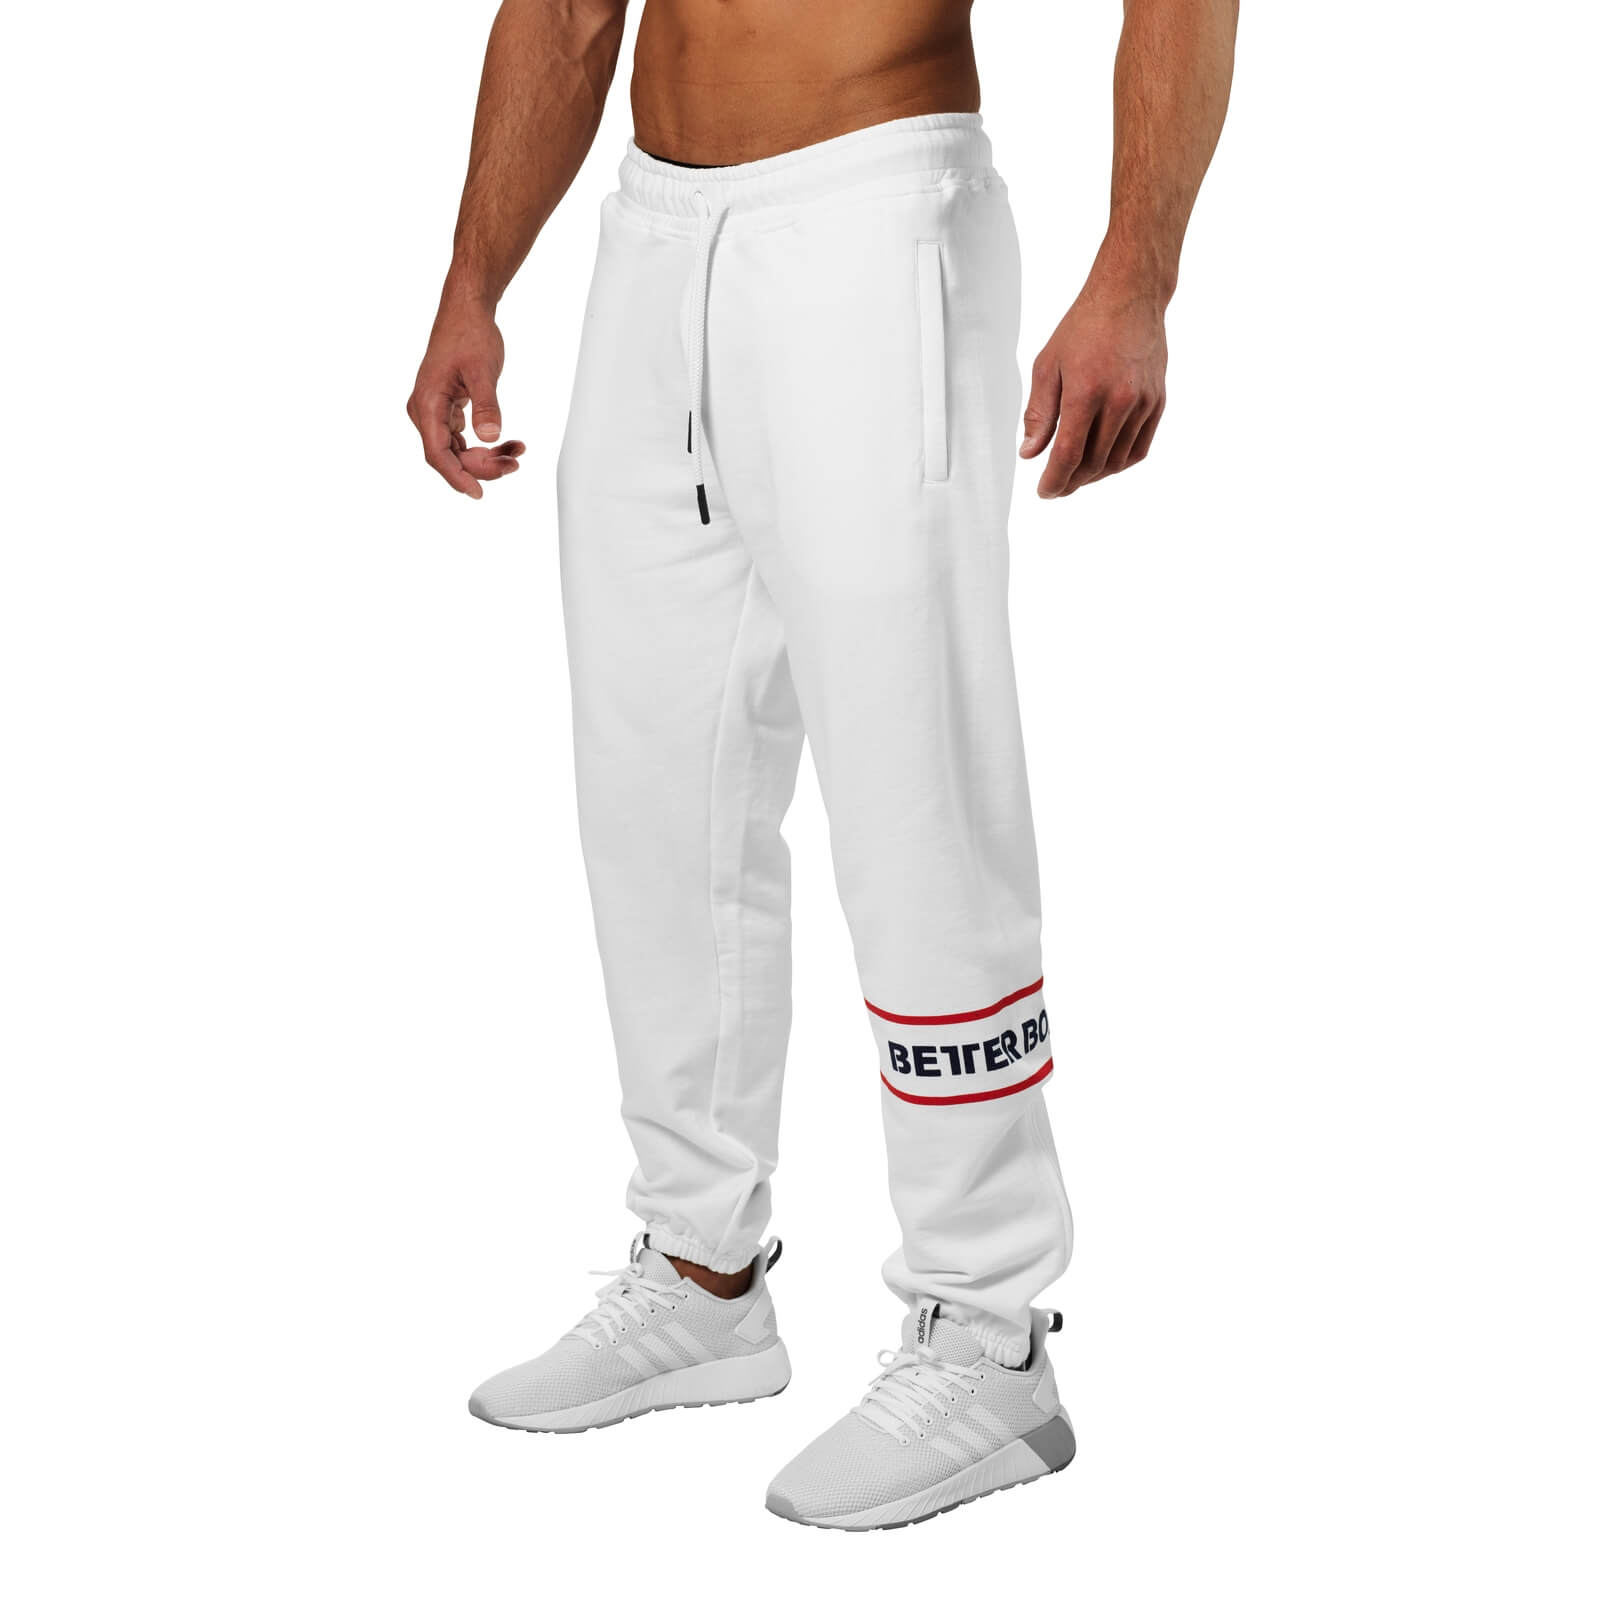 Sjekke Tribeca Sweat Pants, white, Better Bodies hos SportGymButikken.no